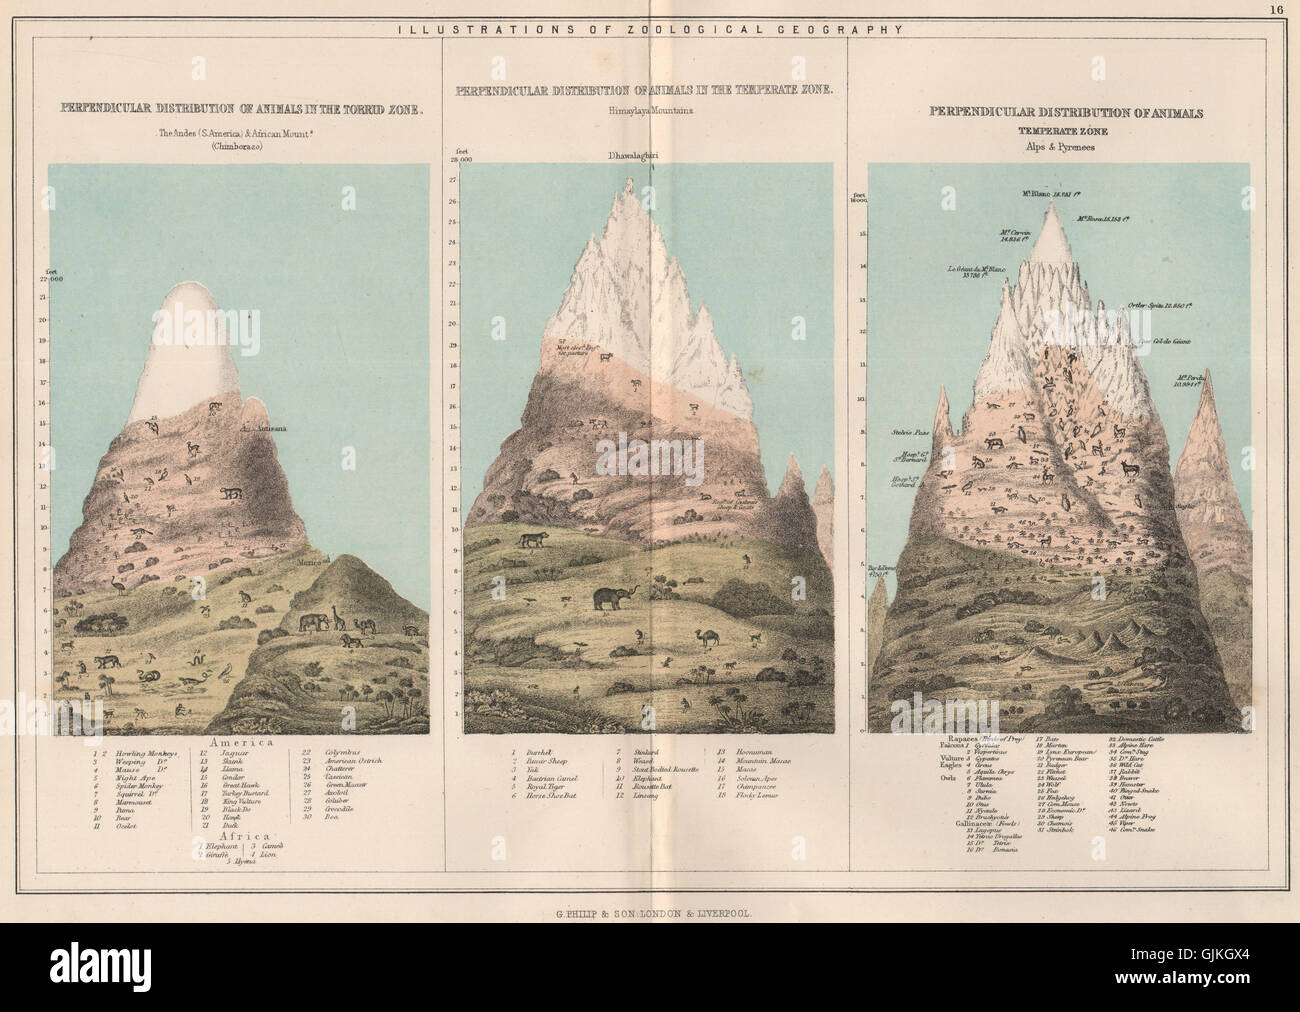 VERTIKALE TIER VERTEILUNG. Anden; Chimborazo; Himalaya; Alpen; Pyrenäen, 1886-Karte Stockfoto